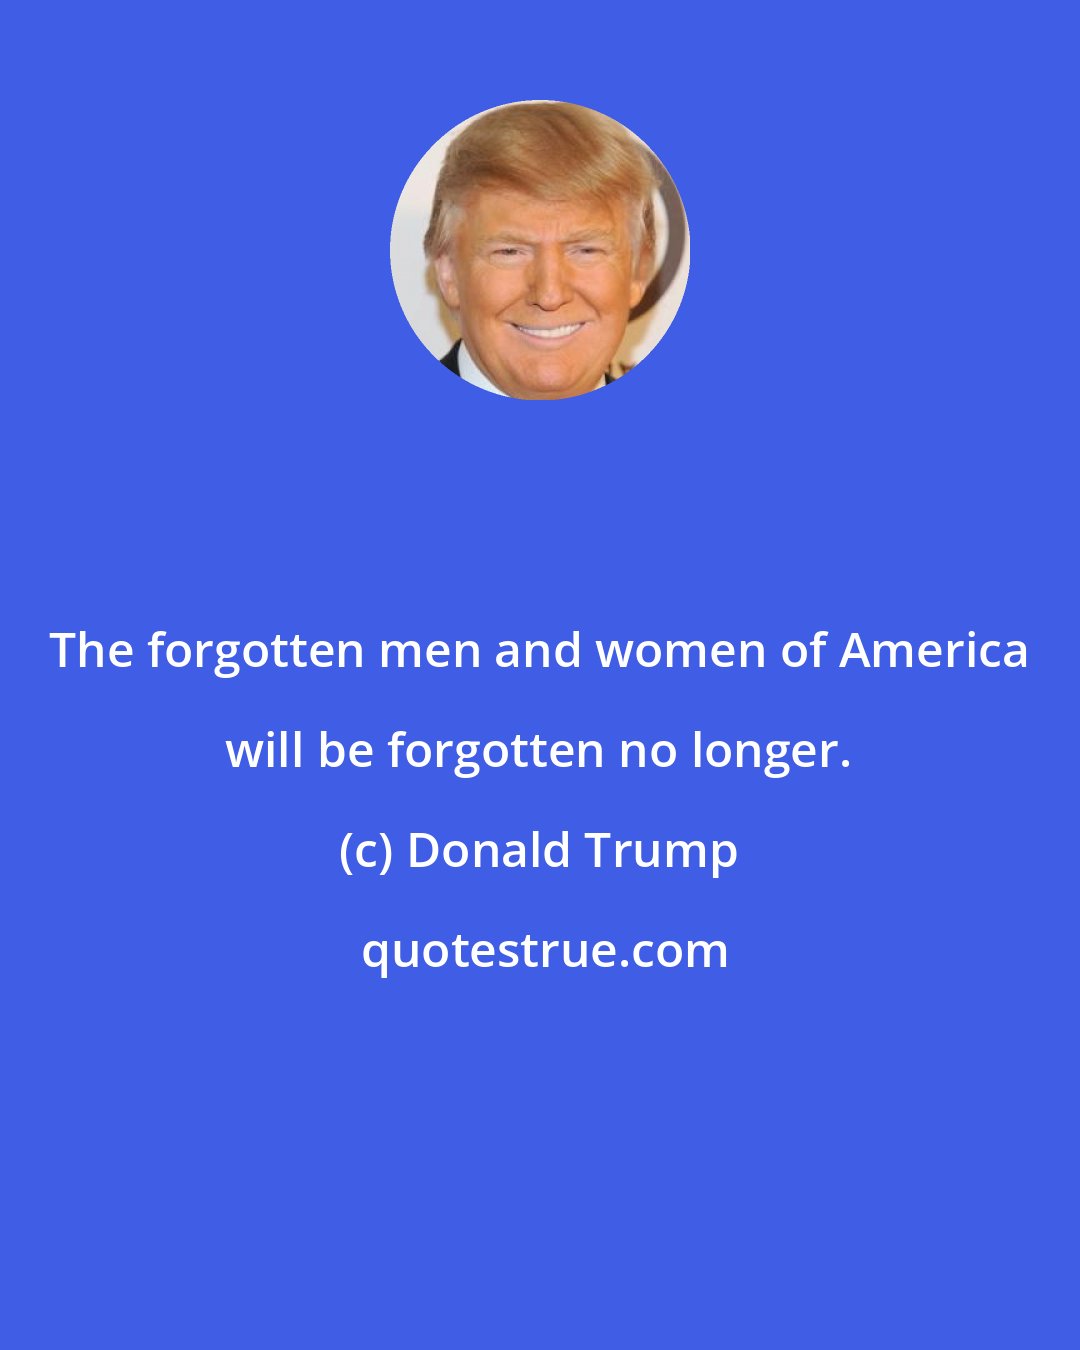 Donald Trump: The forgotten men and women of America will be forgotten no longer.